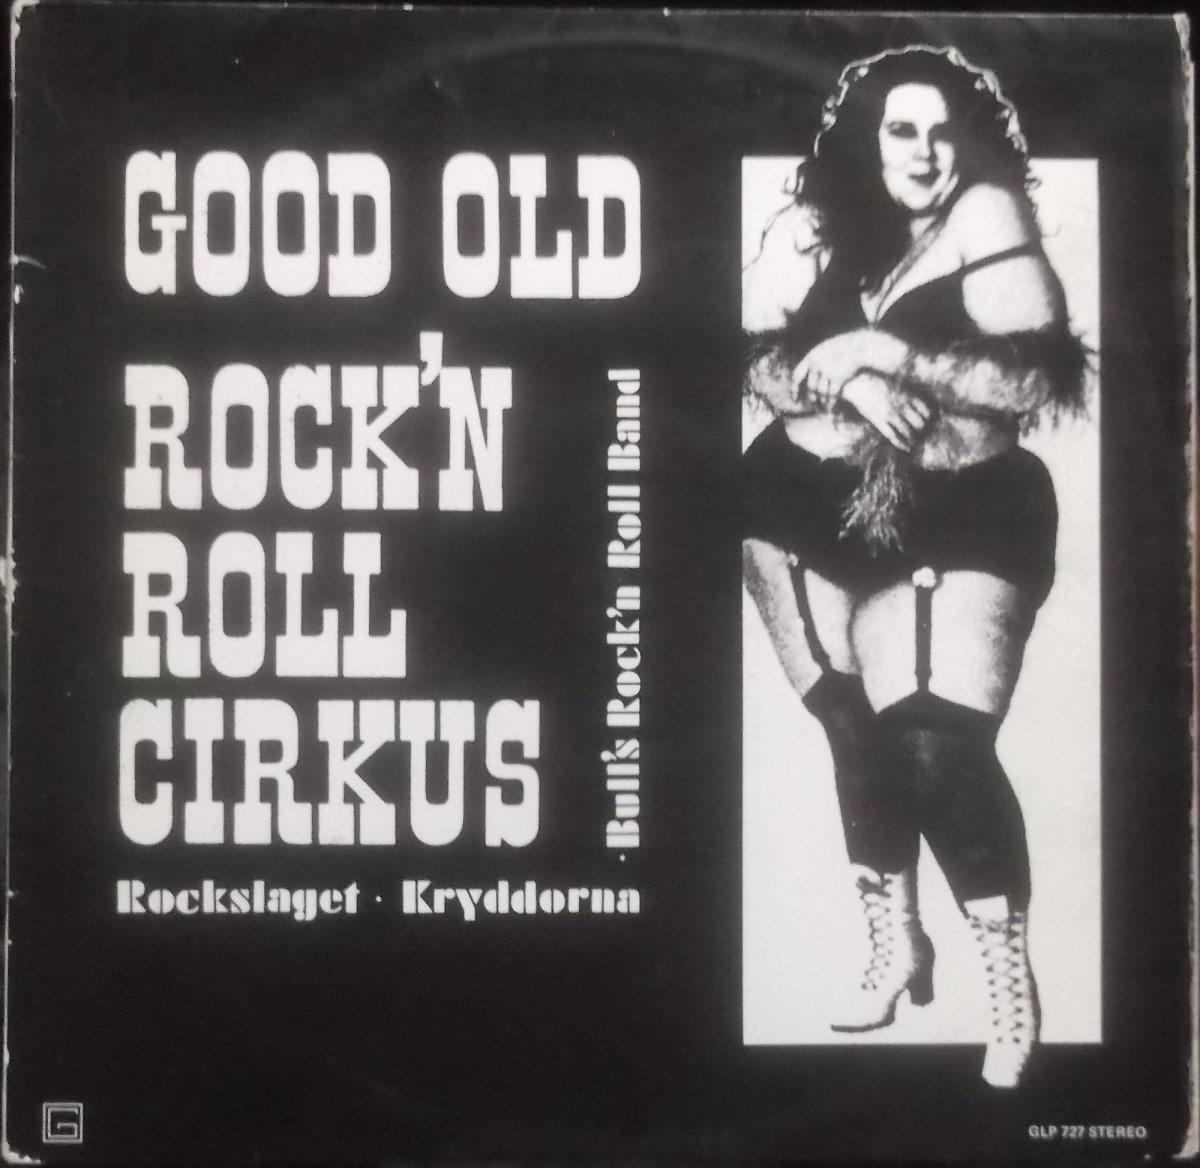 Rockslaget , Bull's Rock'n Roll Band, Kryddorna – Good Old Rock'n Roll Circus